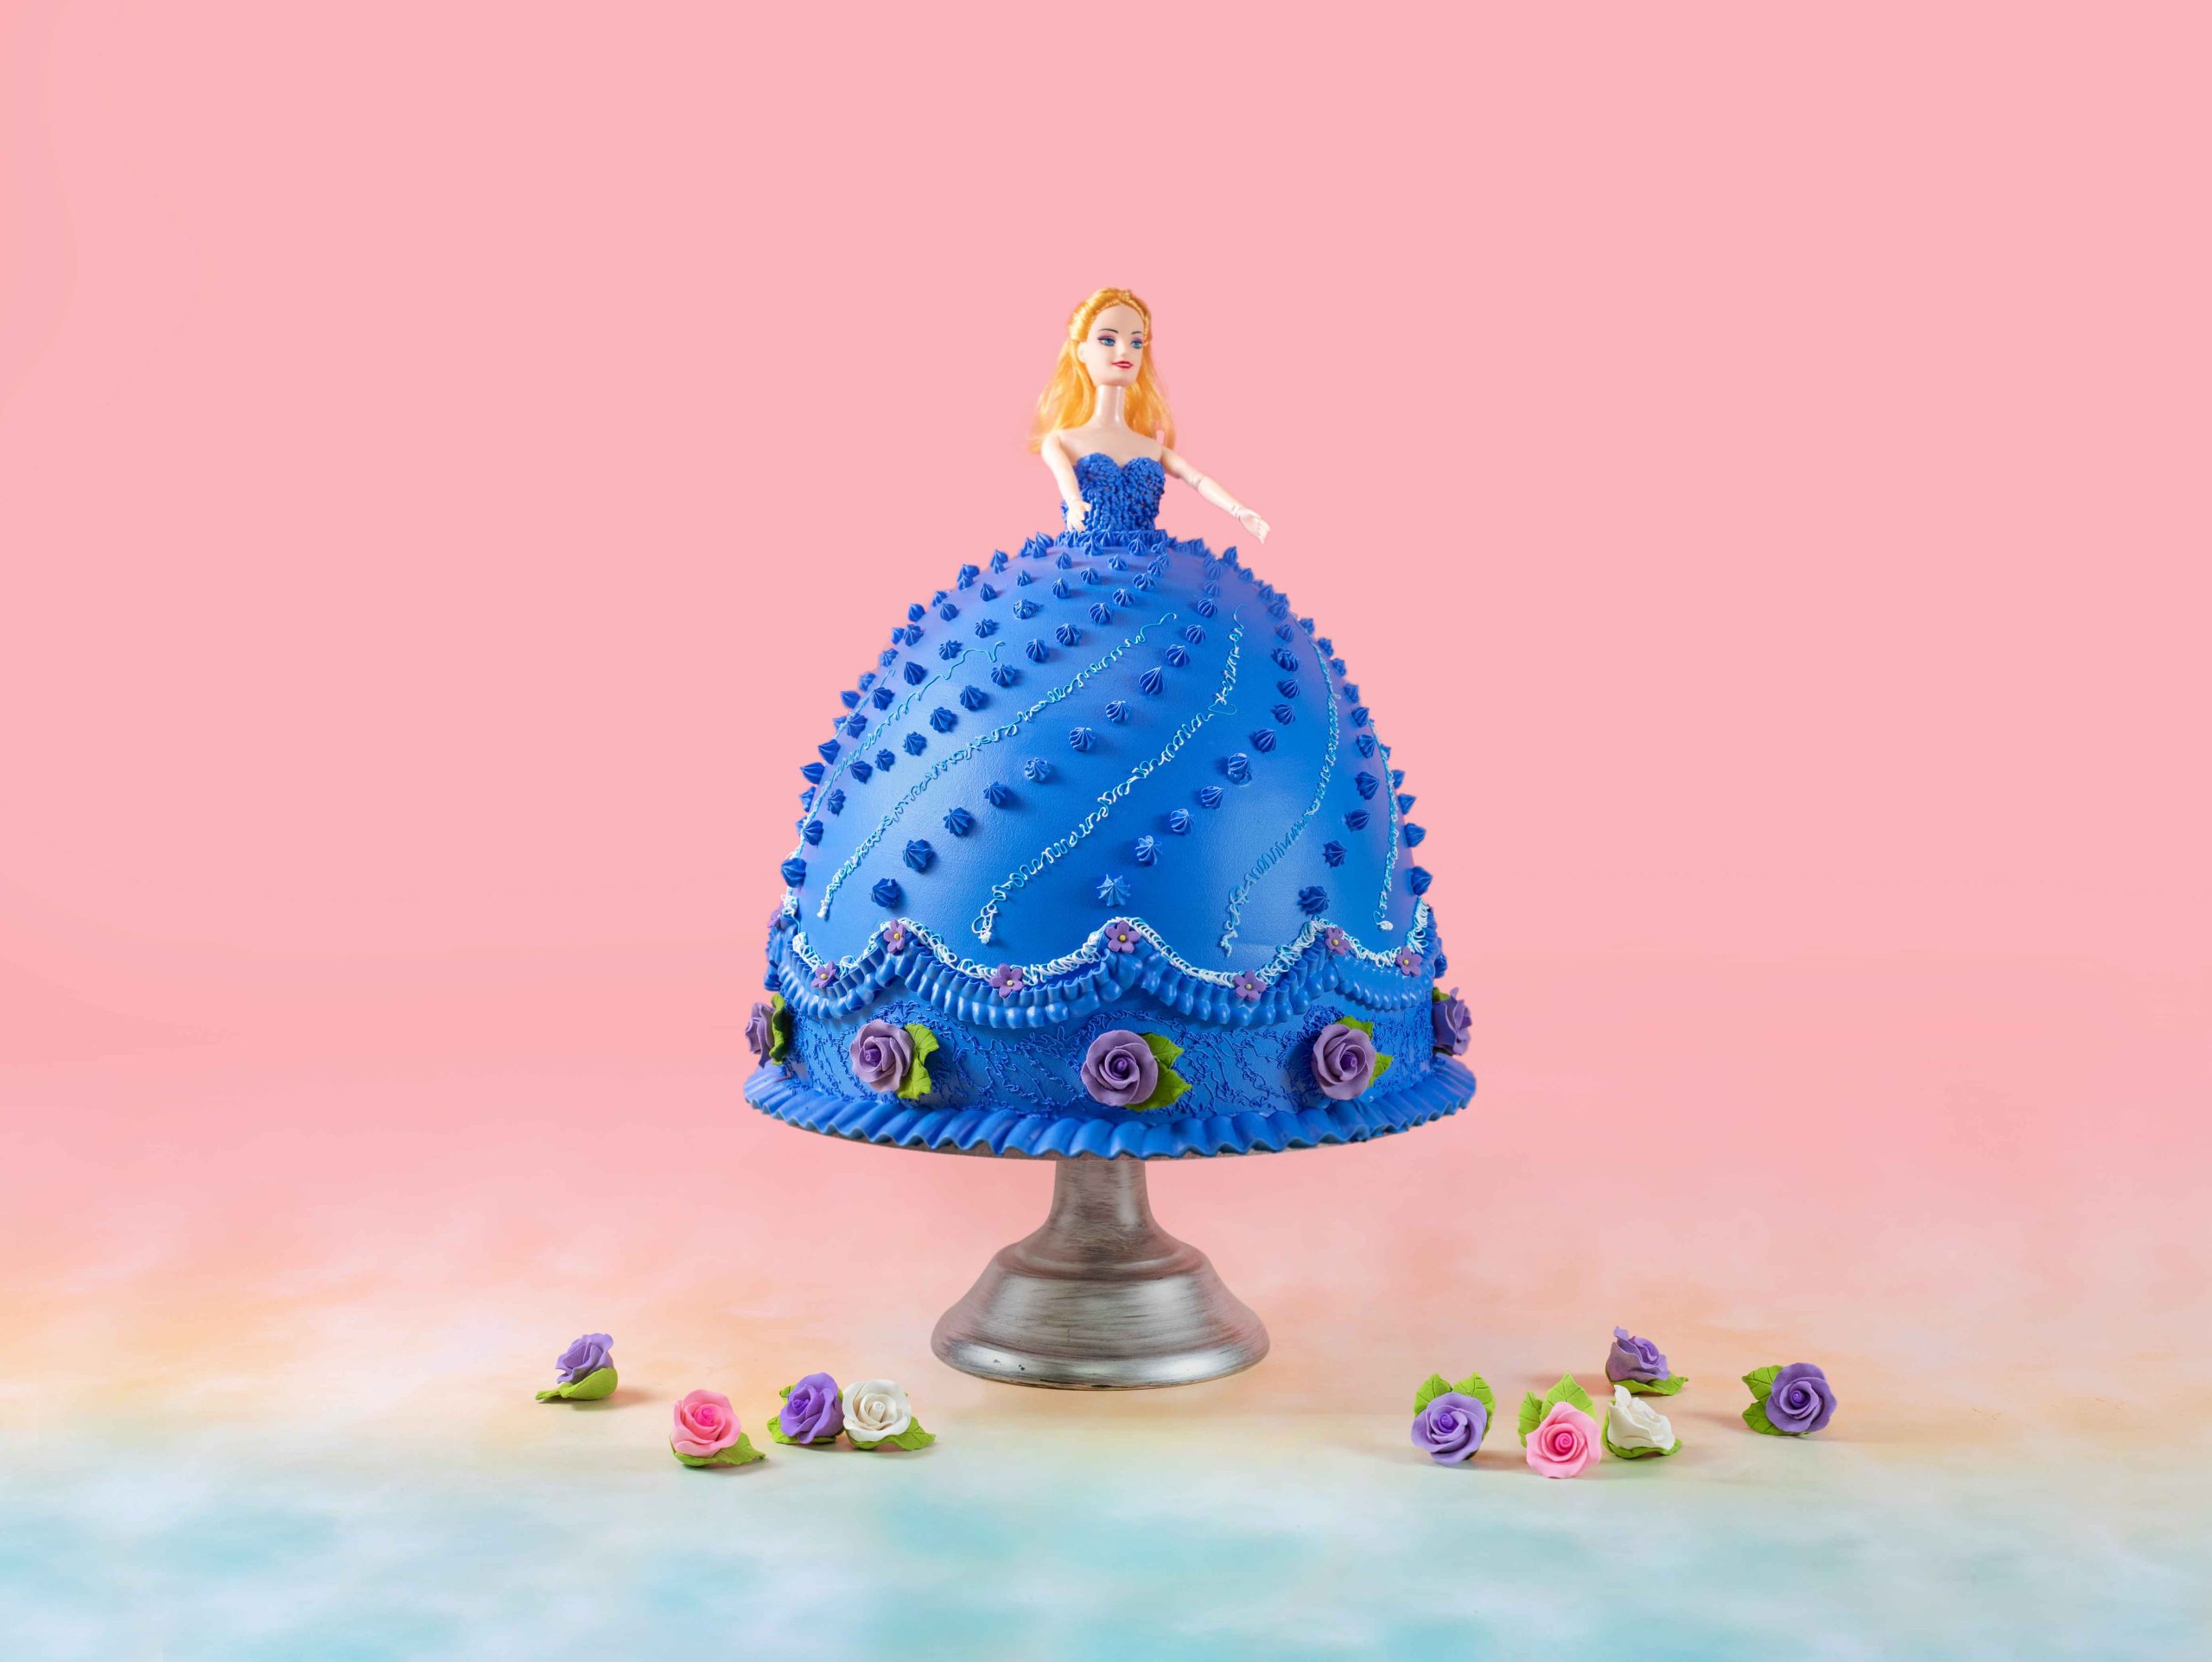 Oceanic Princess Cake